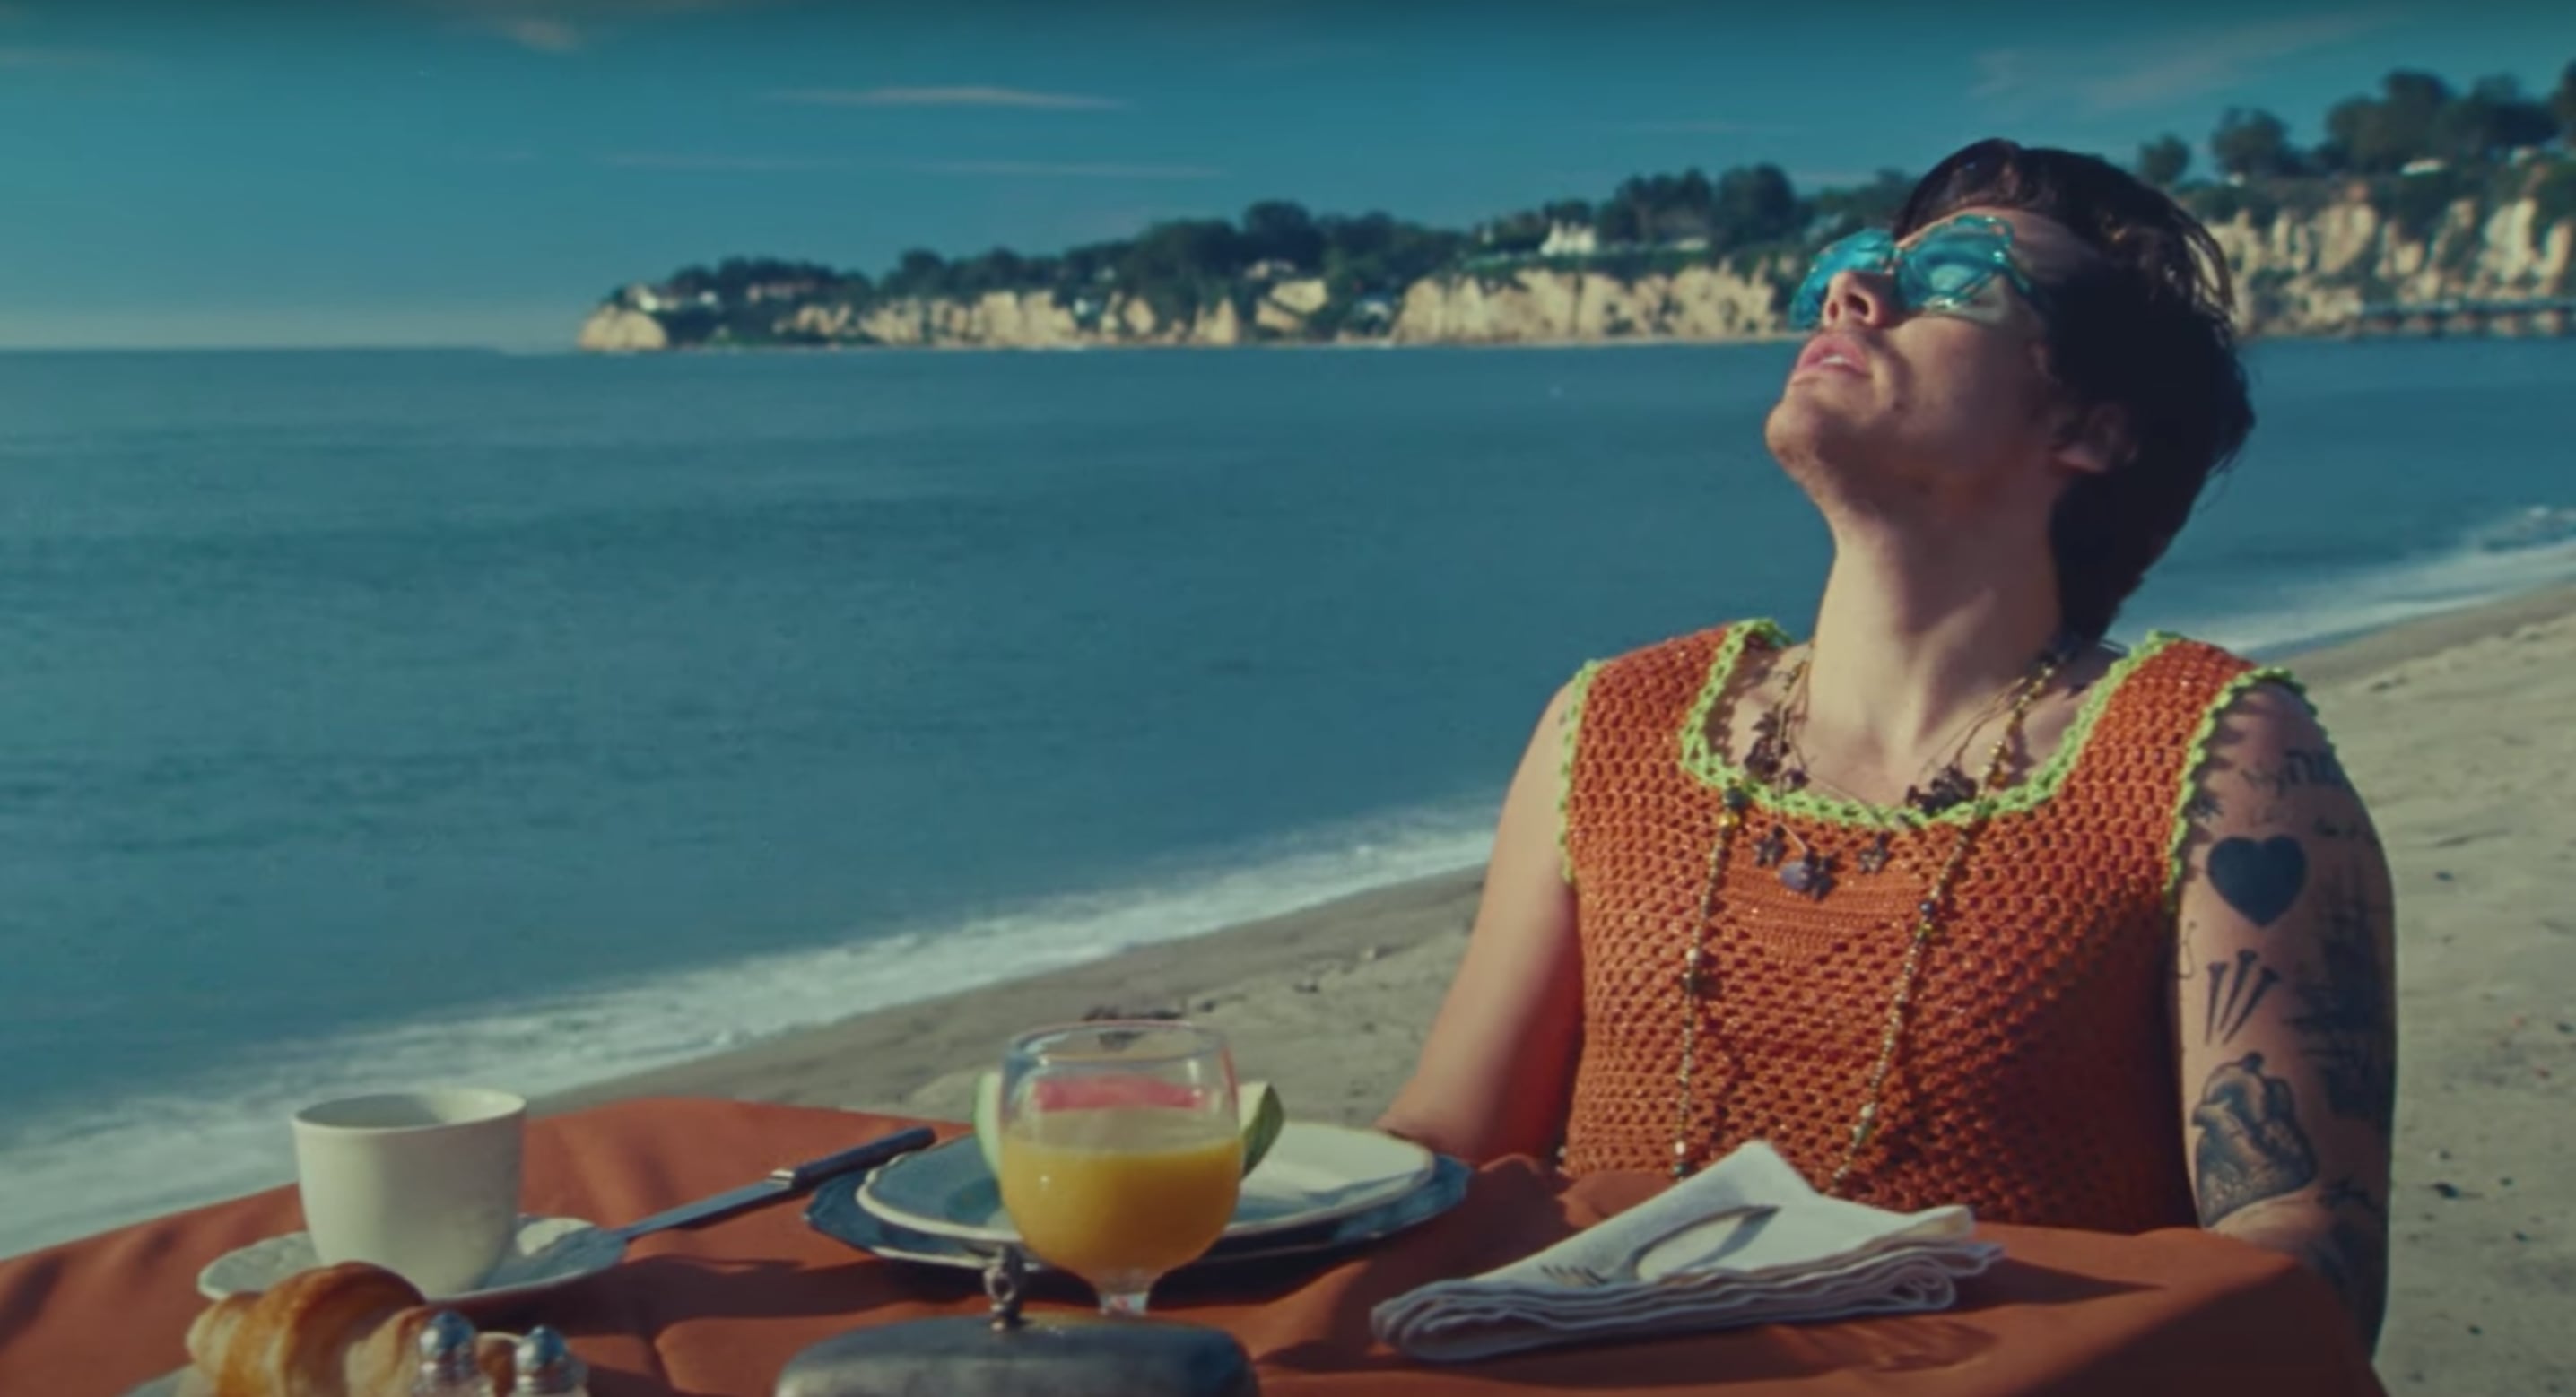 StyleSteal: Harry Styles's retro looks in 'Watermelon Sugar' music video